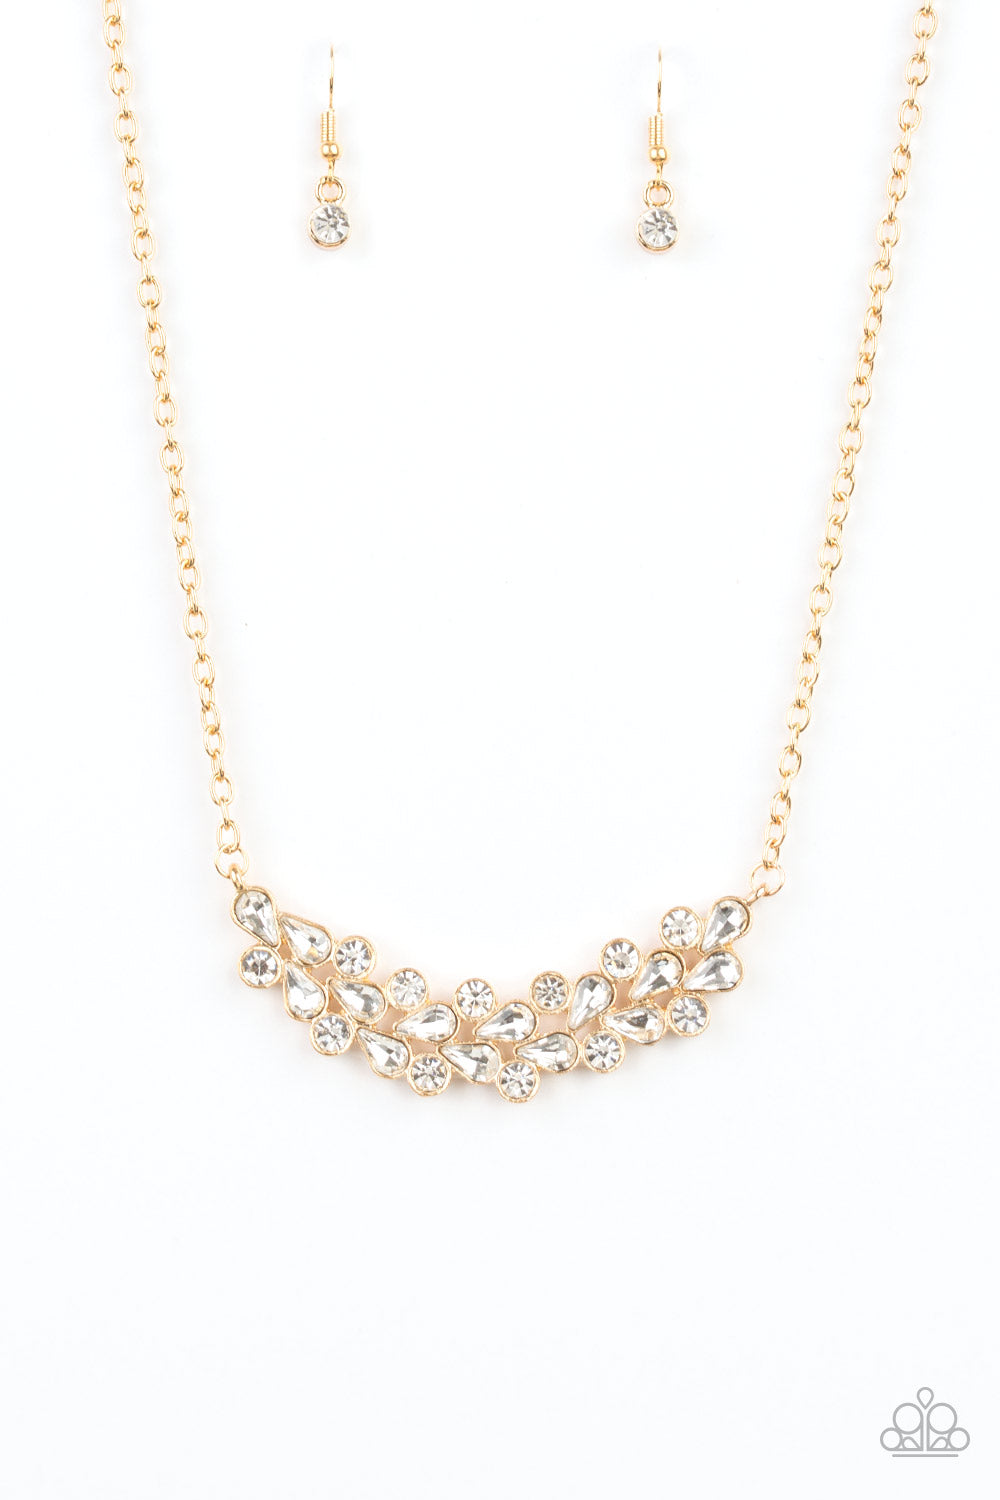 Special Treatment - Gold Necklace Set - Princess Glam Shop